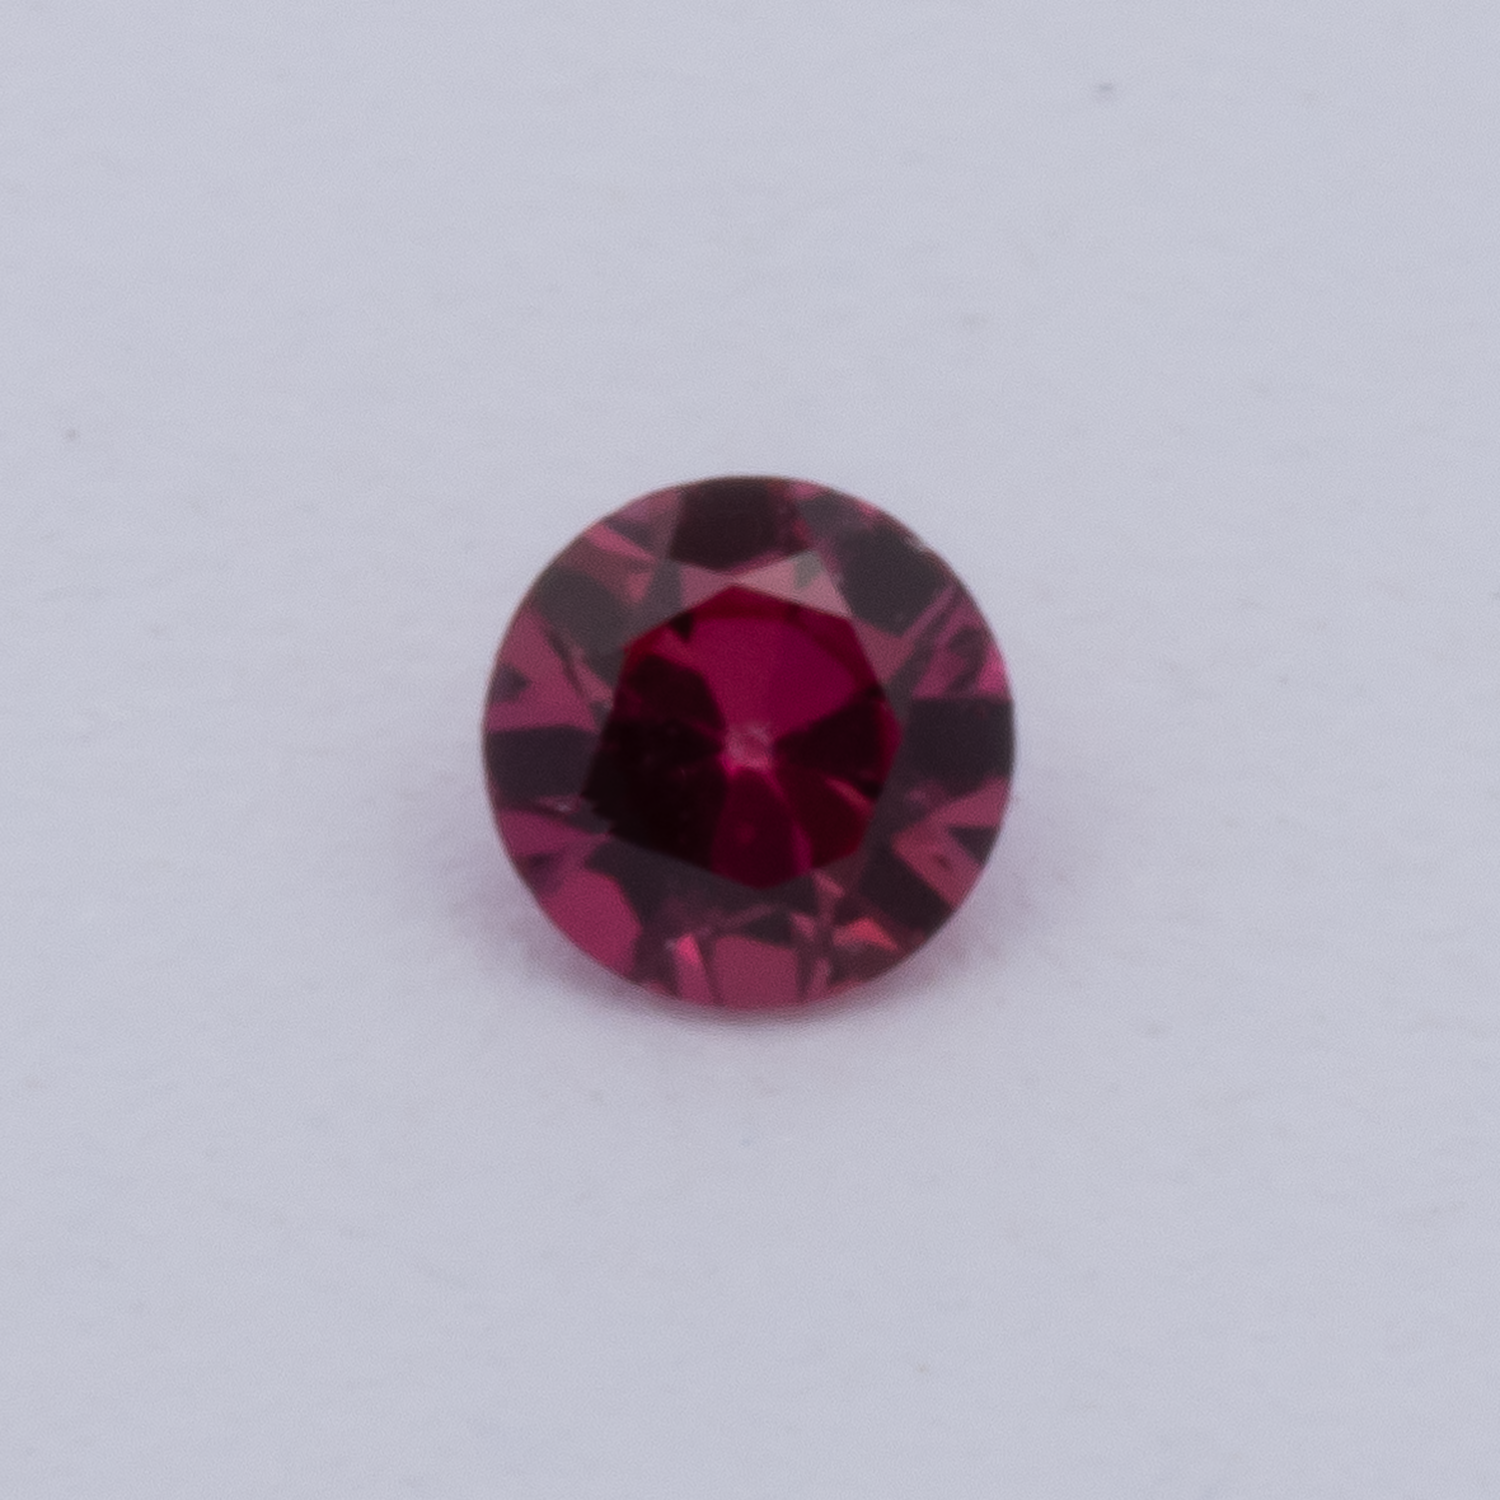 Rubin - rot, rund, 1.7x1.7 mm, 0.02 cts, Nr. RY10028